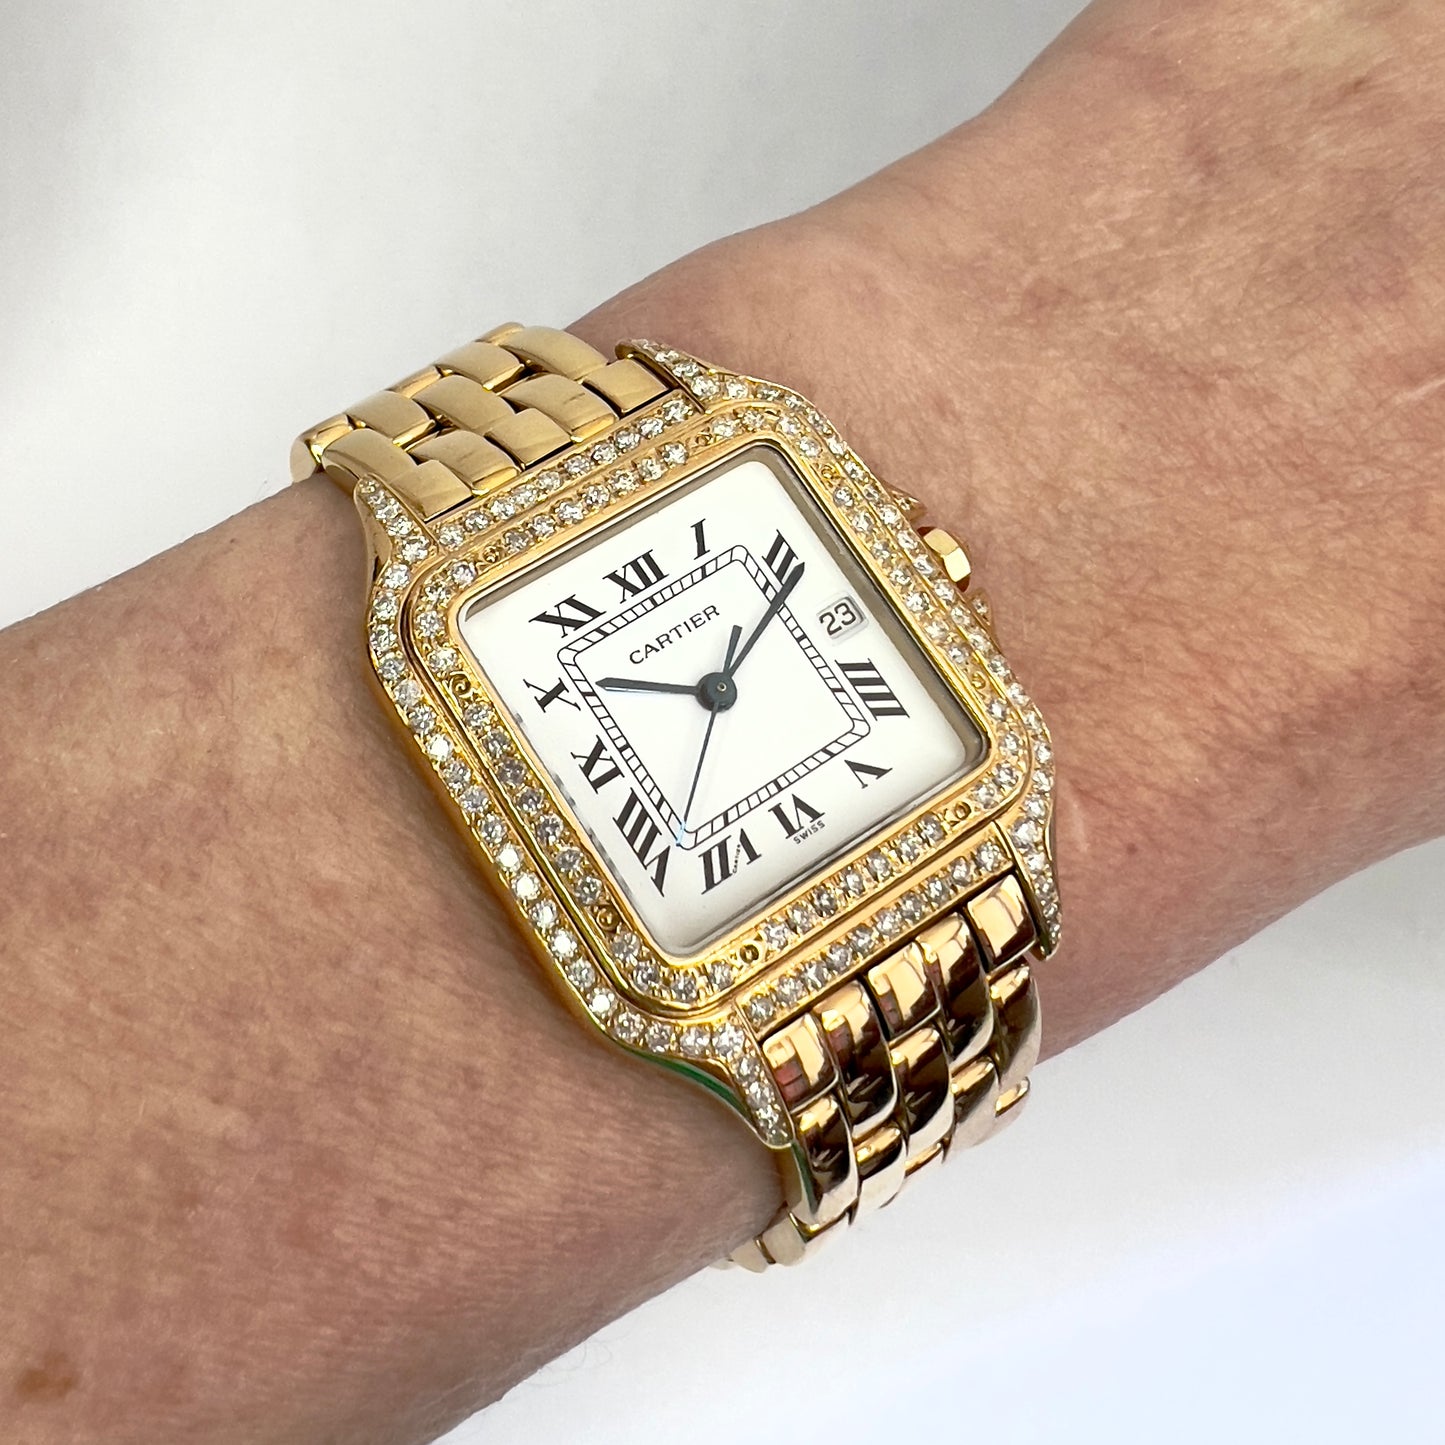 CARTIER PANTHERE 27mm 18K Yellow Gold 1.30TCW Diamond Watch